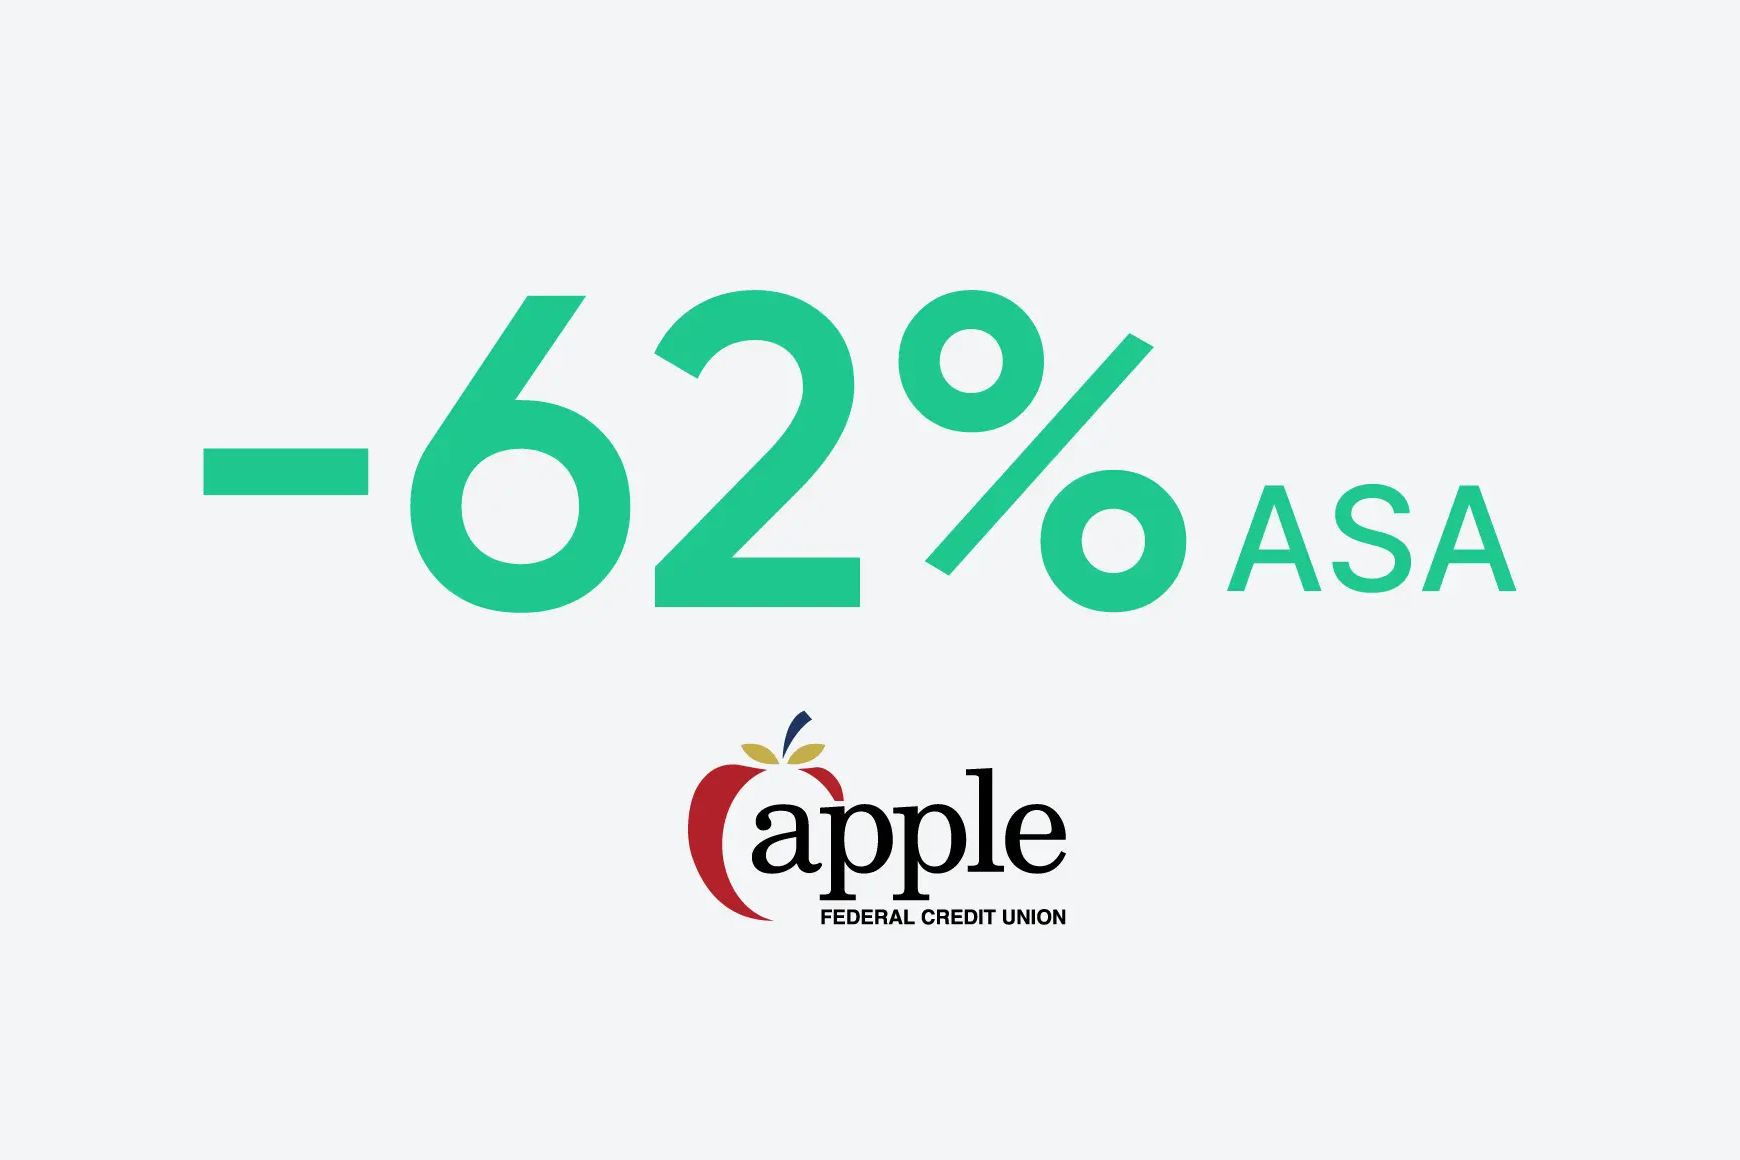 Apple Federal Credit Union redujo la ASA en un 62 %